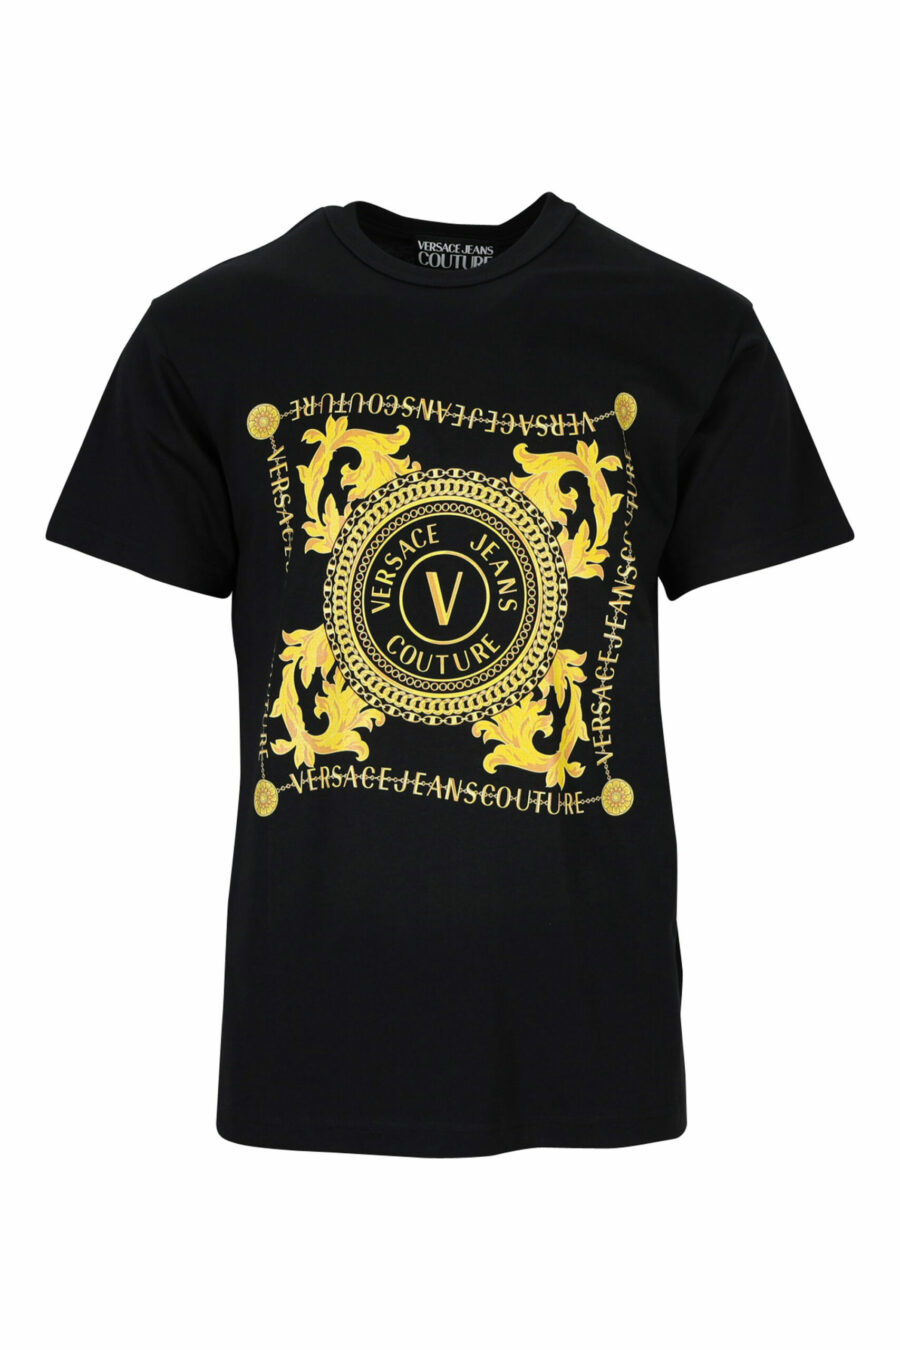 T-shirt preta com maxilogo barroco circular - 8052019477481 scaled